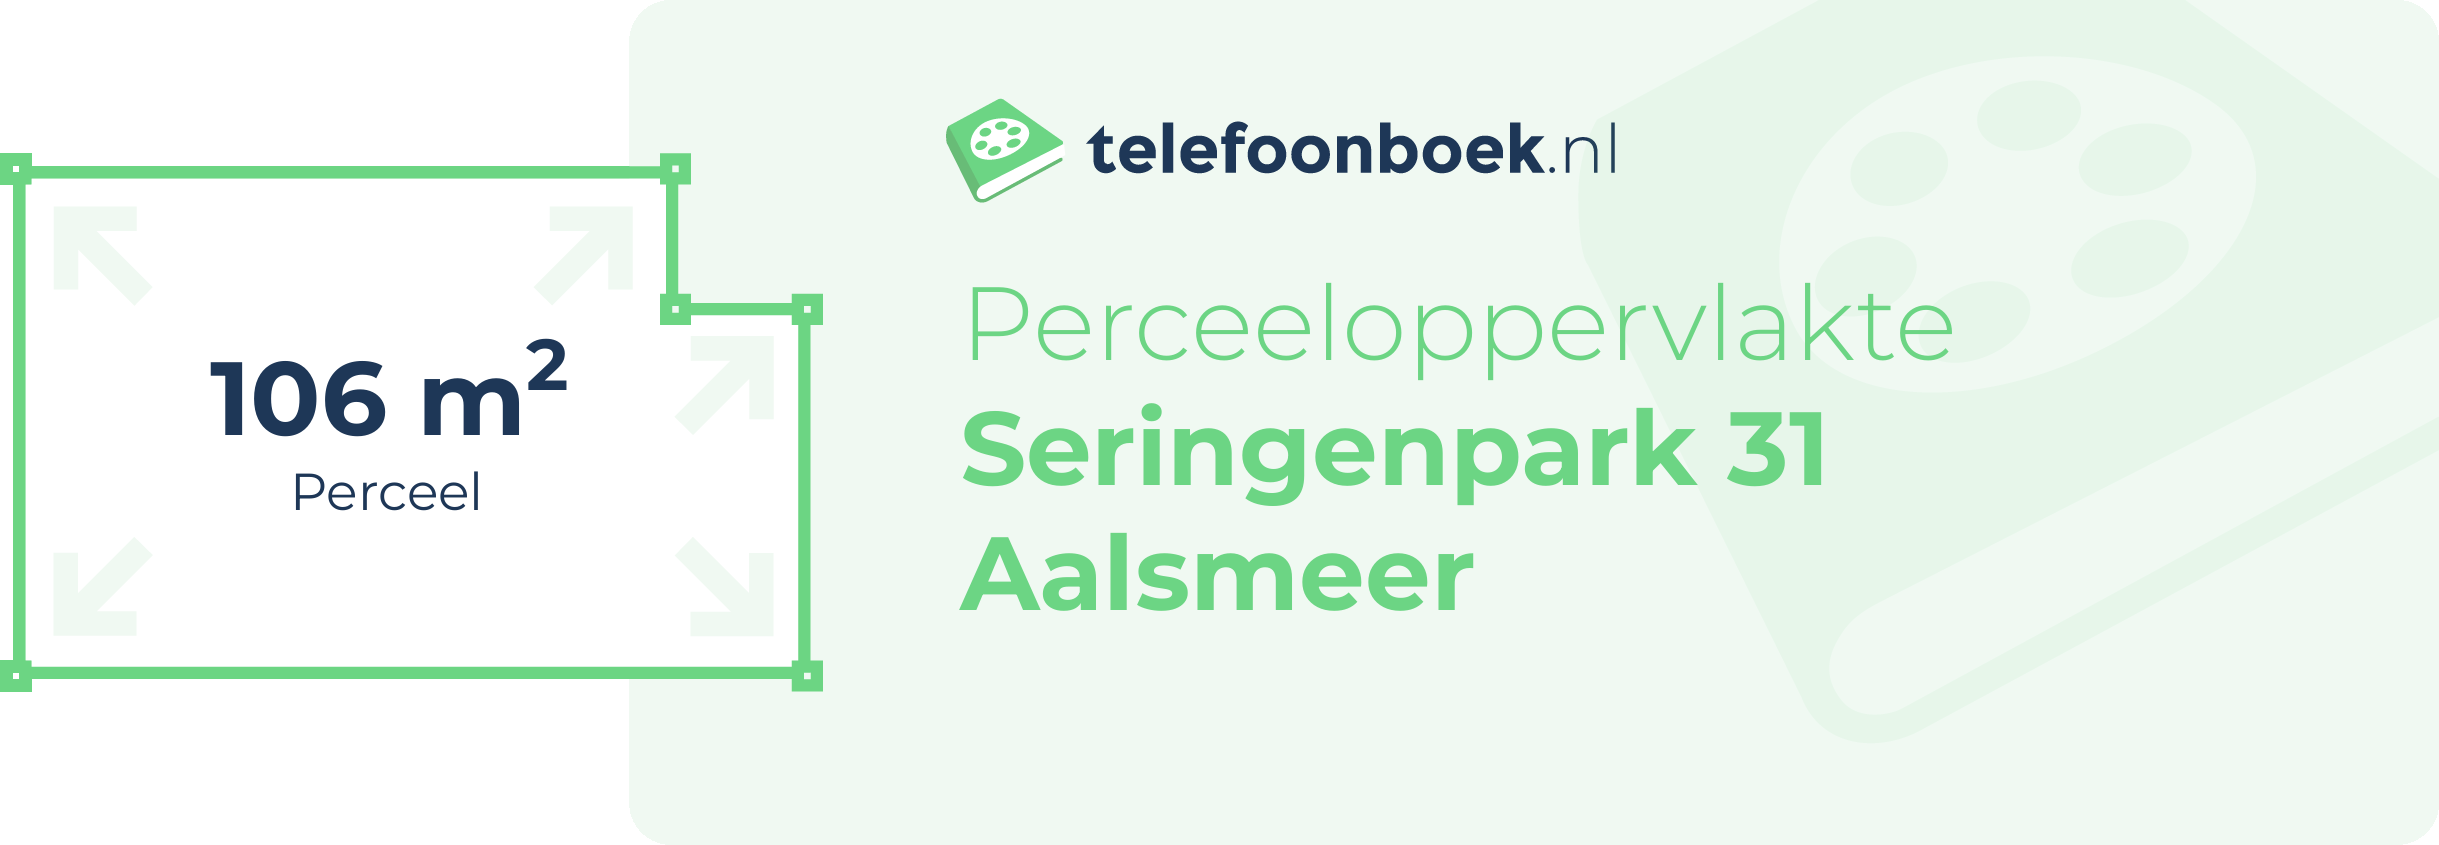 Perceeloppervlakte Seringenpark 31 Aalsmeer